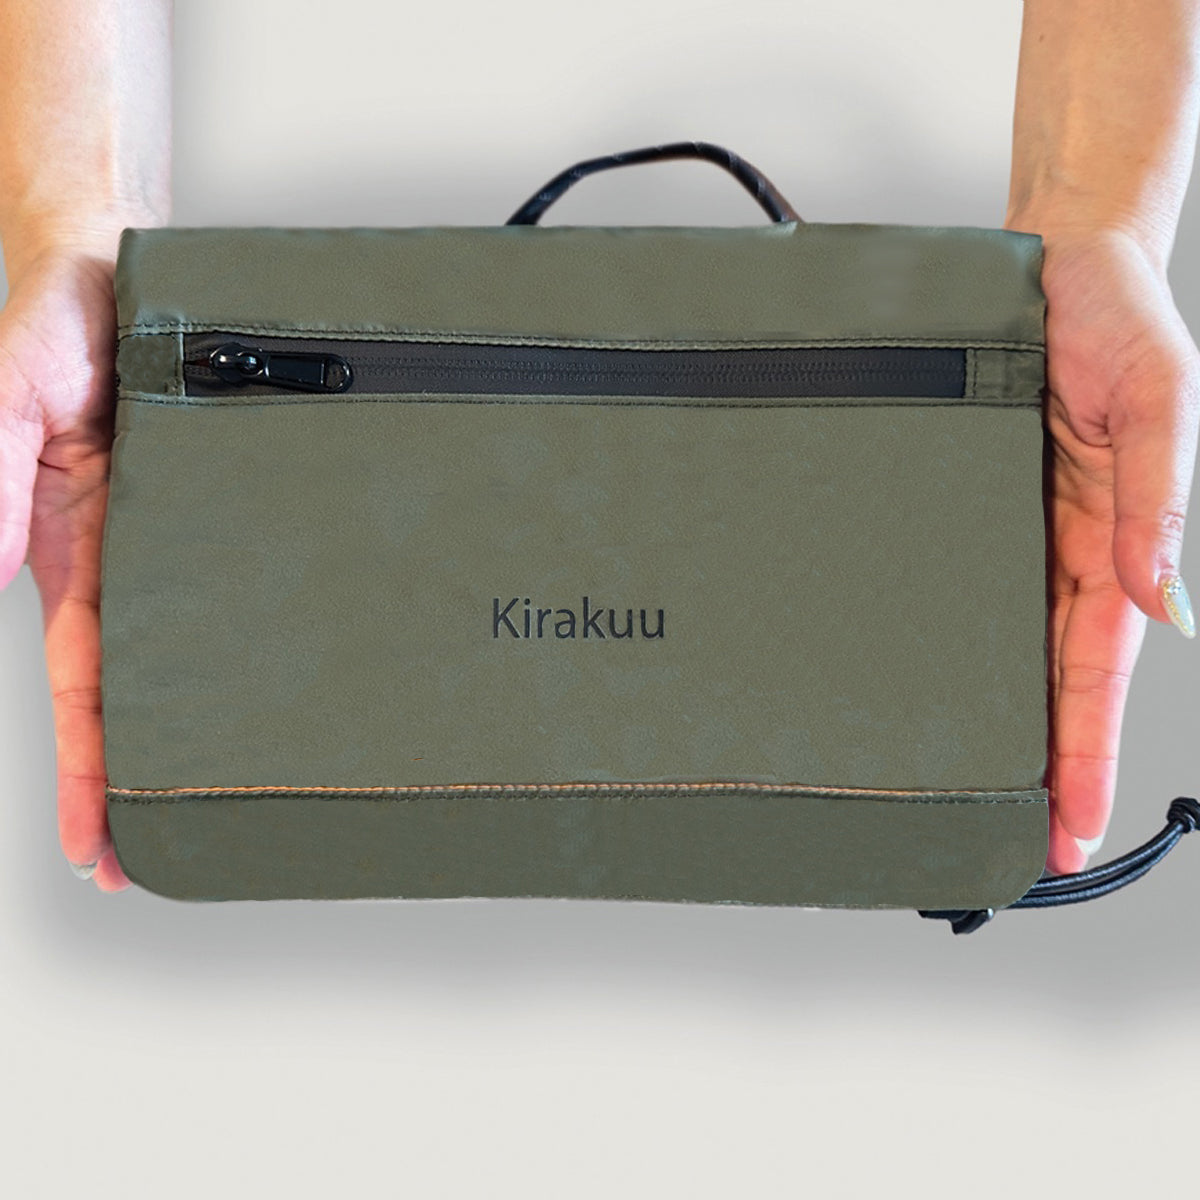 Kirakuu Travel Bag (Buy a Travel Bag to Get Free Juice Bangle)